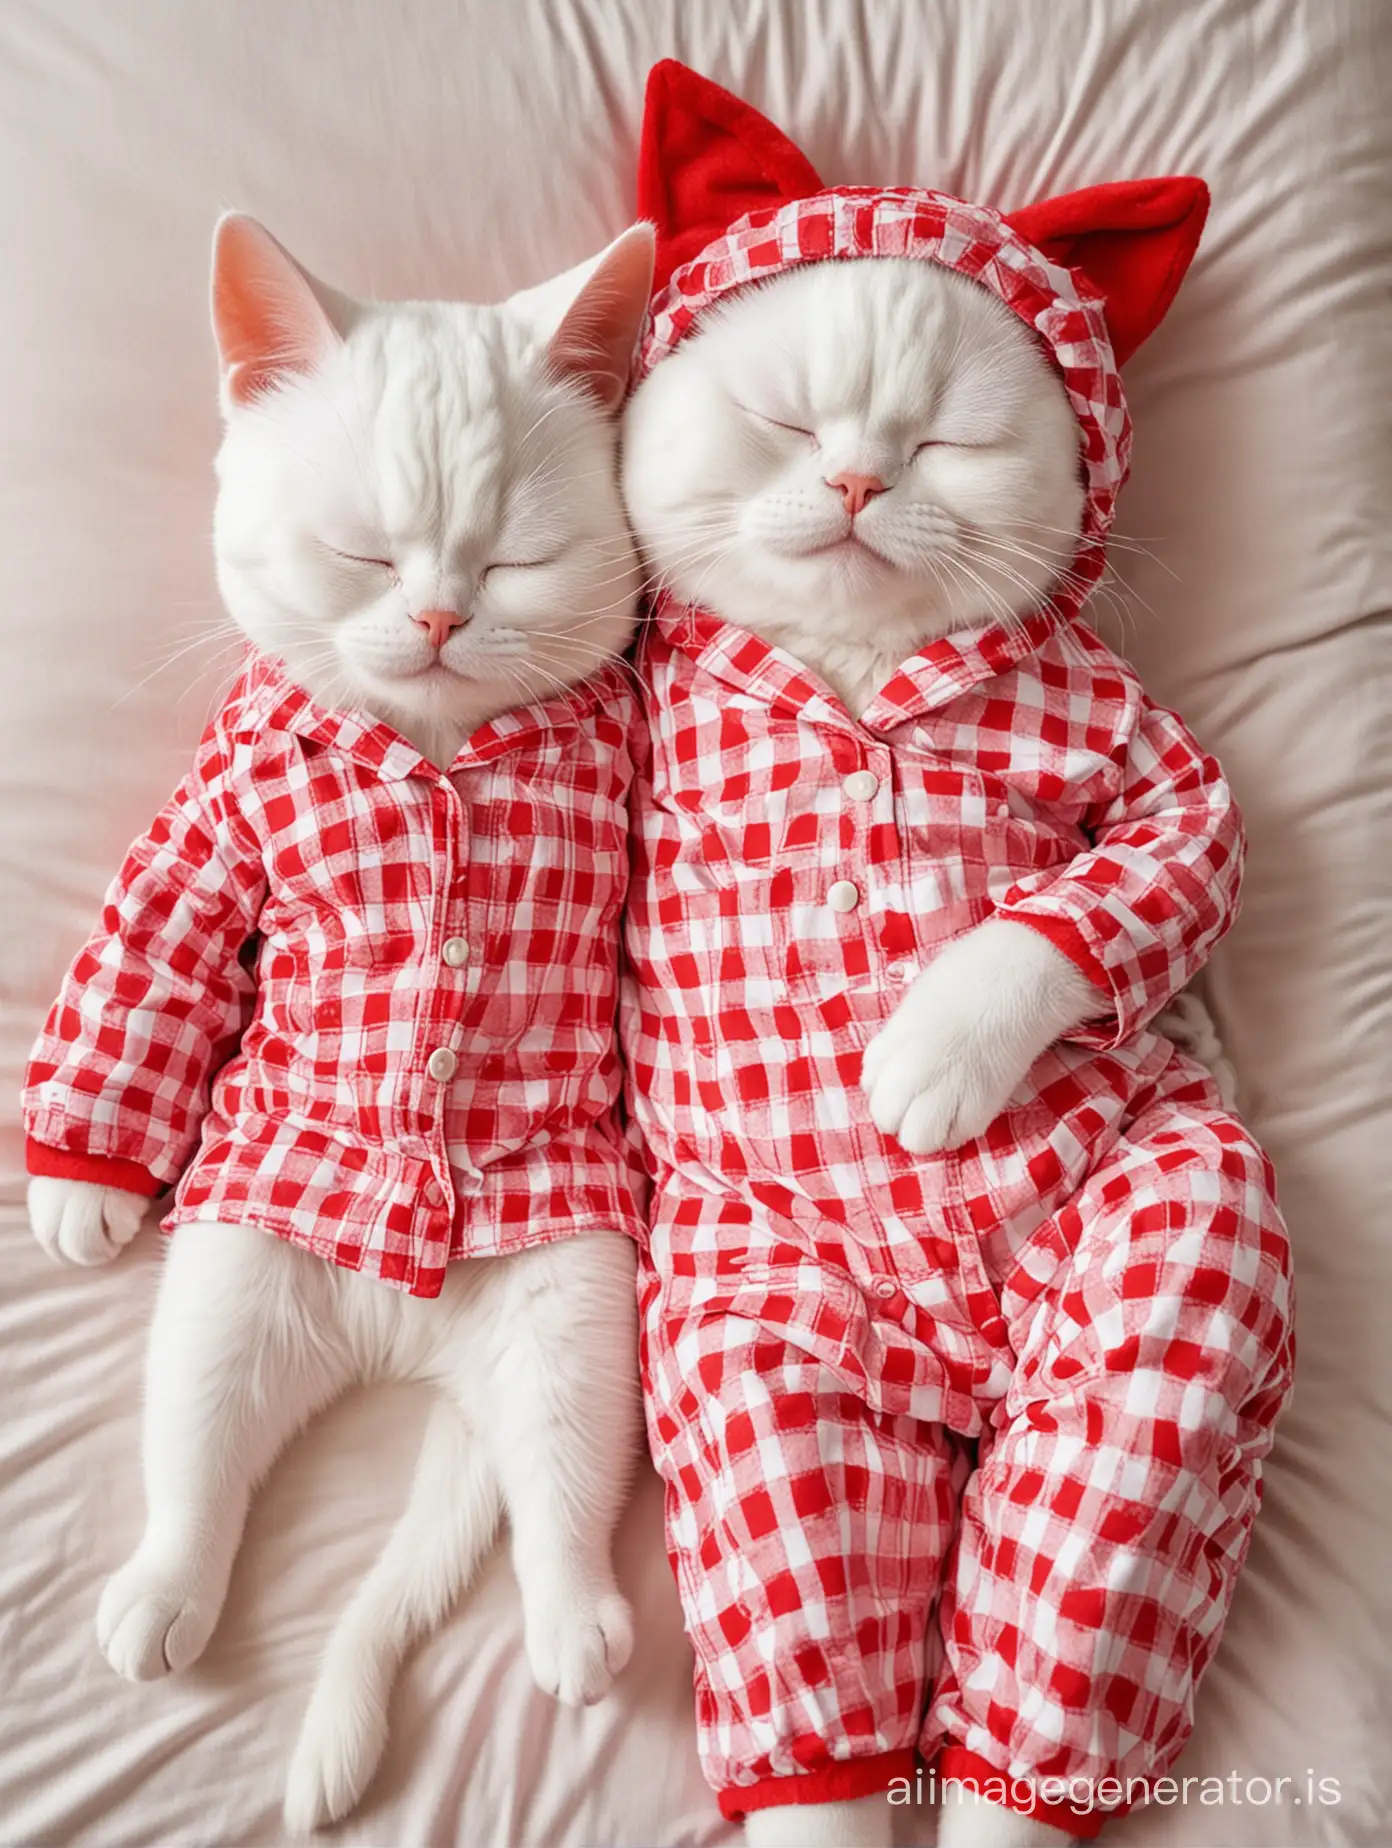 Playful-Red-Cat-in-Pajamas-Wakes-Sleeping-White-Cat